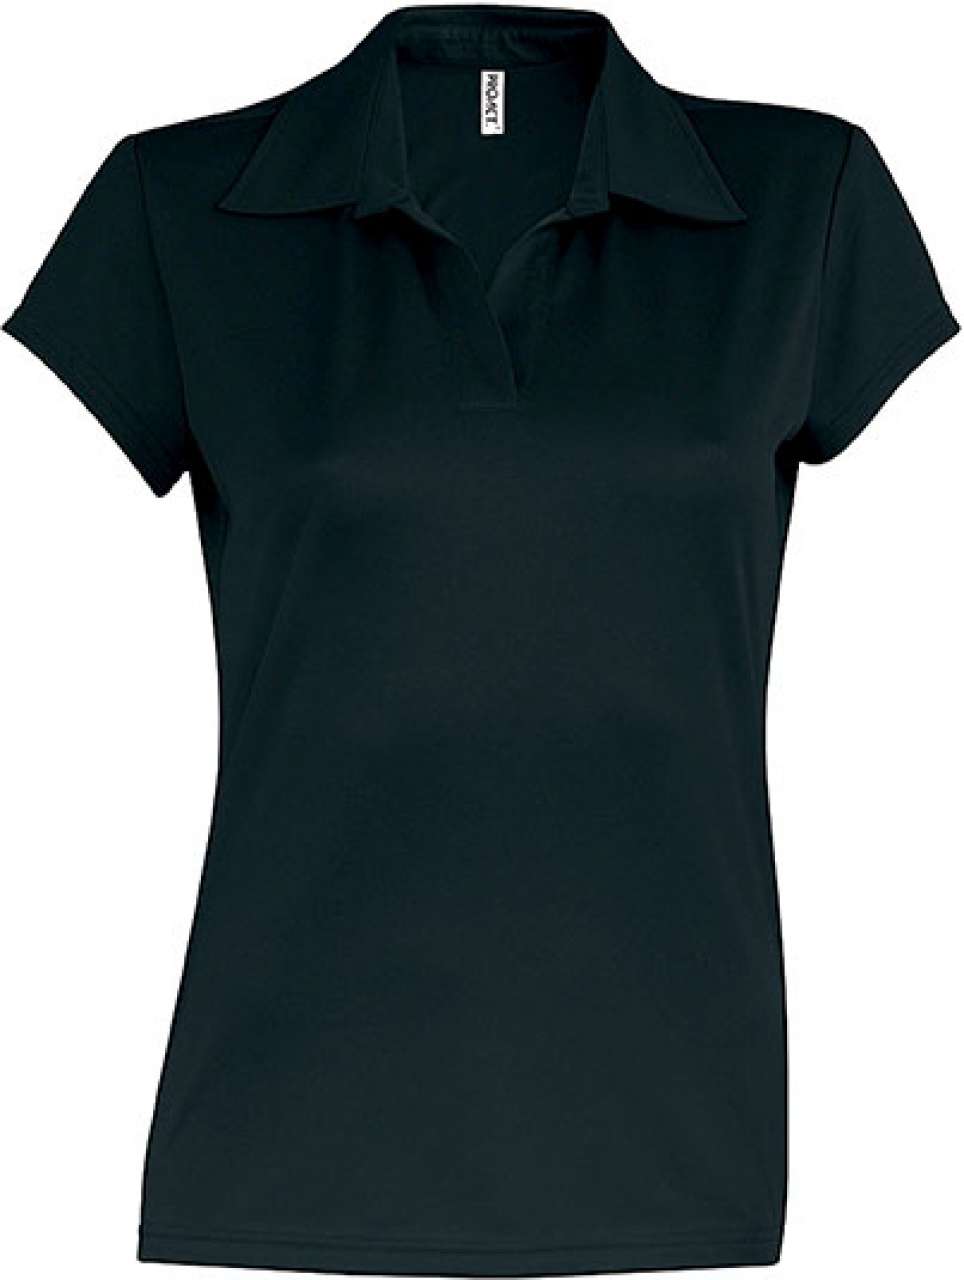 Proact Damen Polo-Shirt Poloshirt Pique T-Shirt Baumwolle Shirt